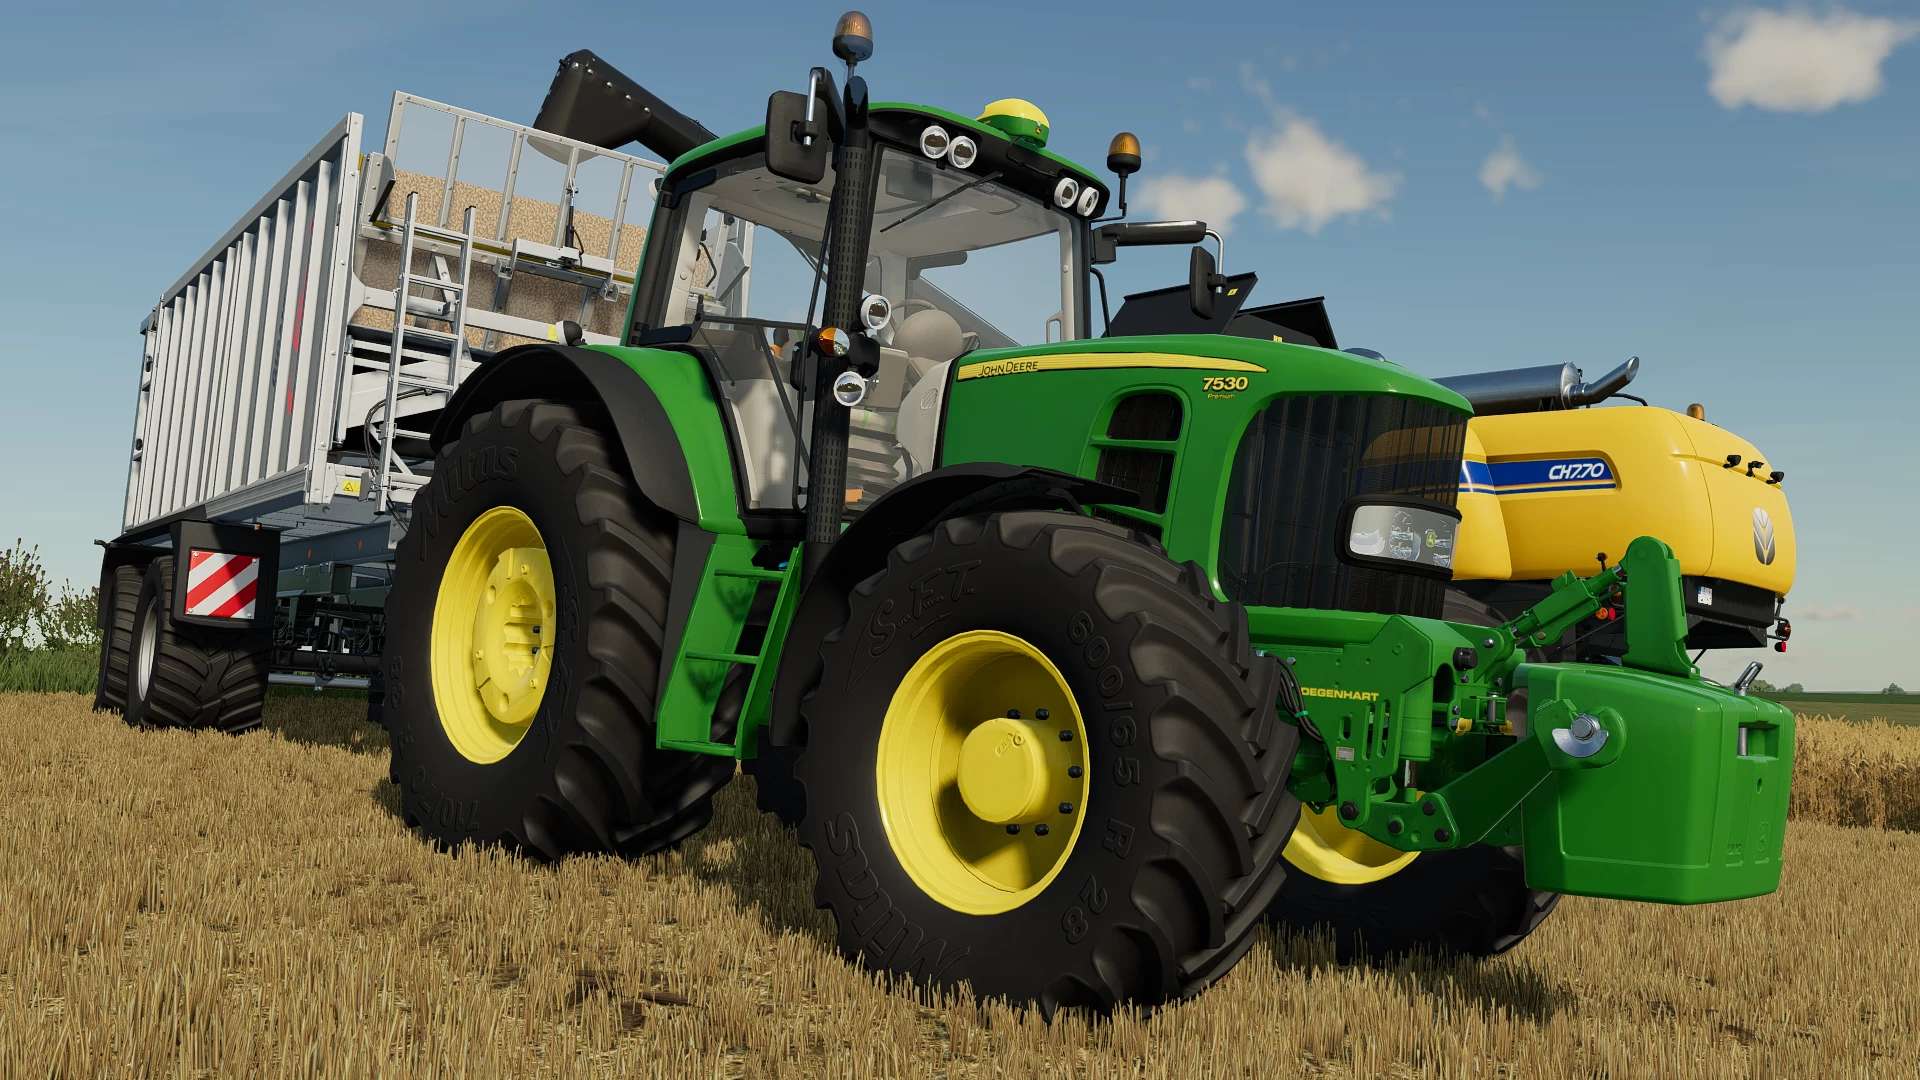 John Deere 7030 Série Premium V1000 Fs22 Mod Farming Simulator 22 Mod 6290